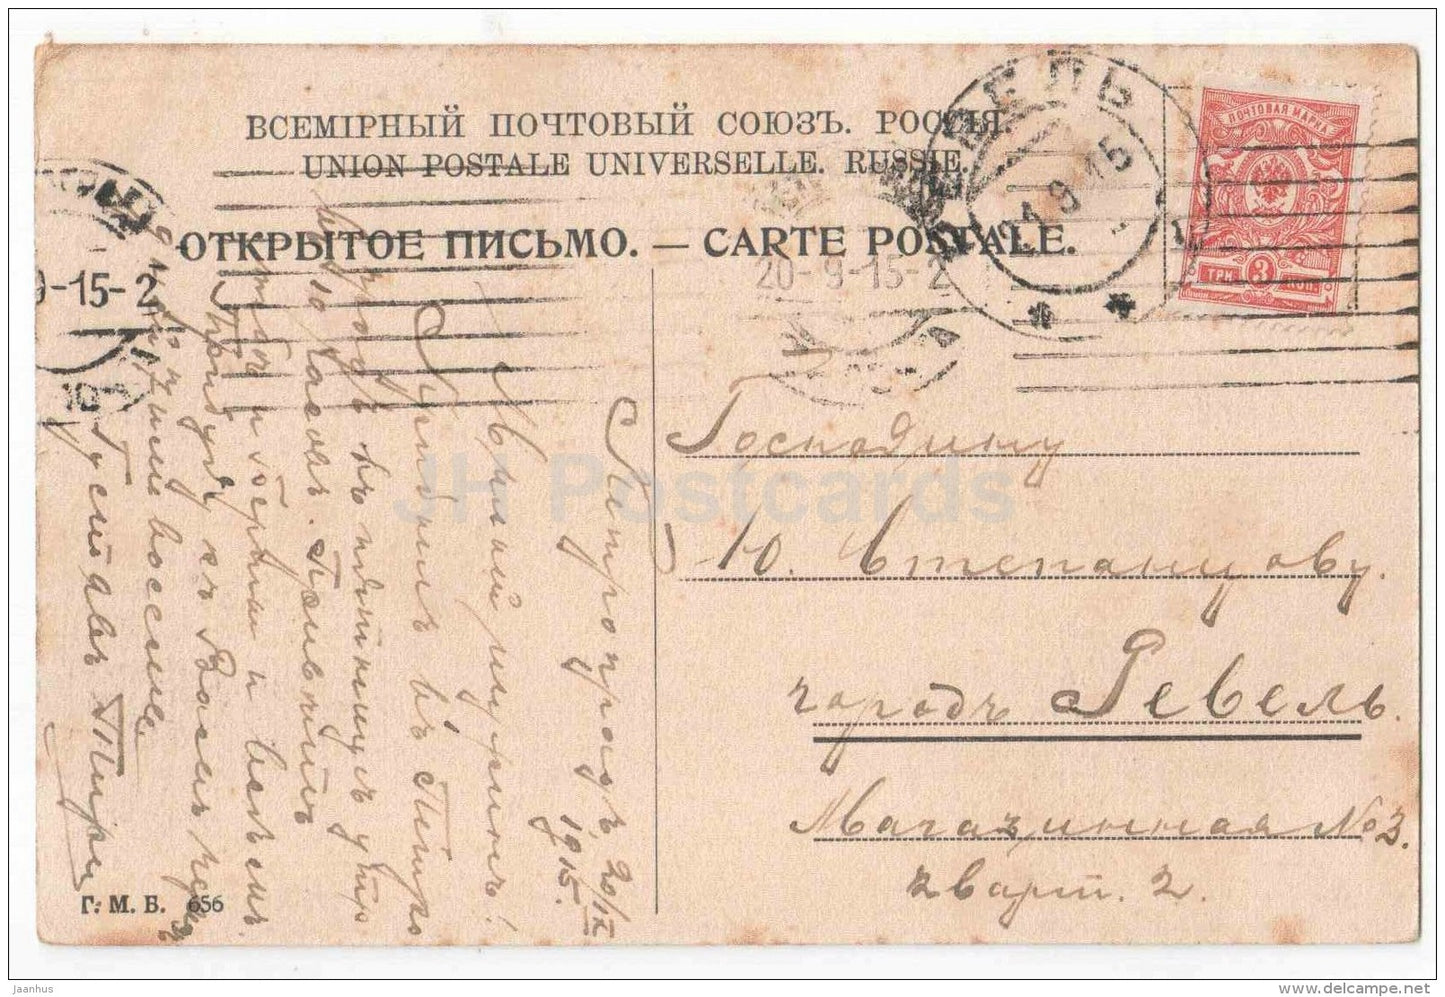 Etat-Major - Newski, coin de la place de l´Amiraute - tram - St. Petersburg - sent from Russia to Estonia Reval 19 - JH Postcards